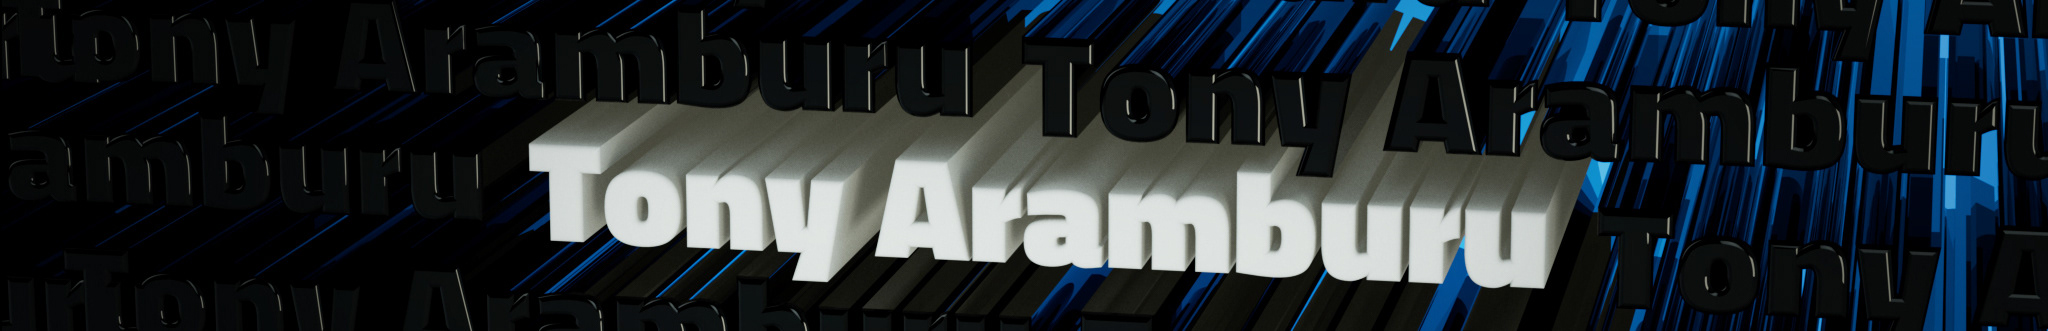 Tony Aramburu's profile banner